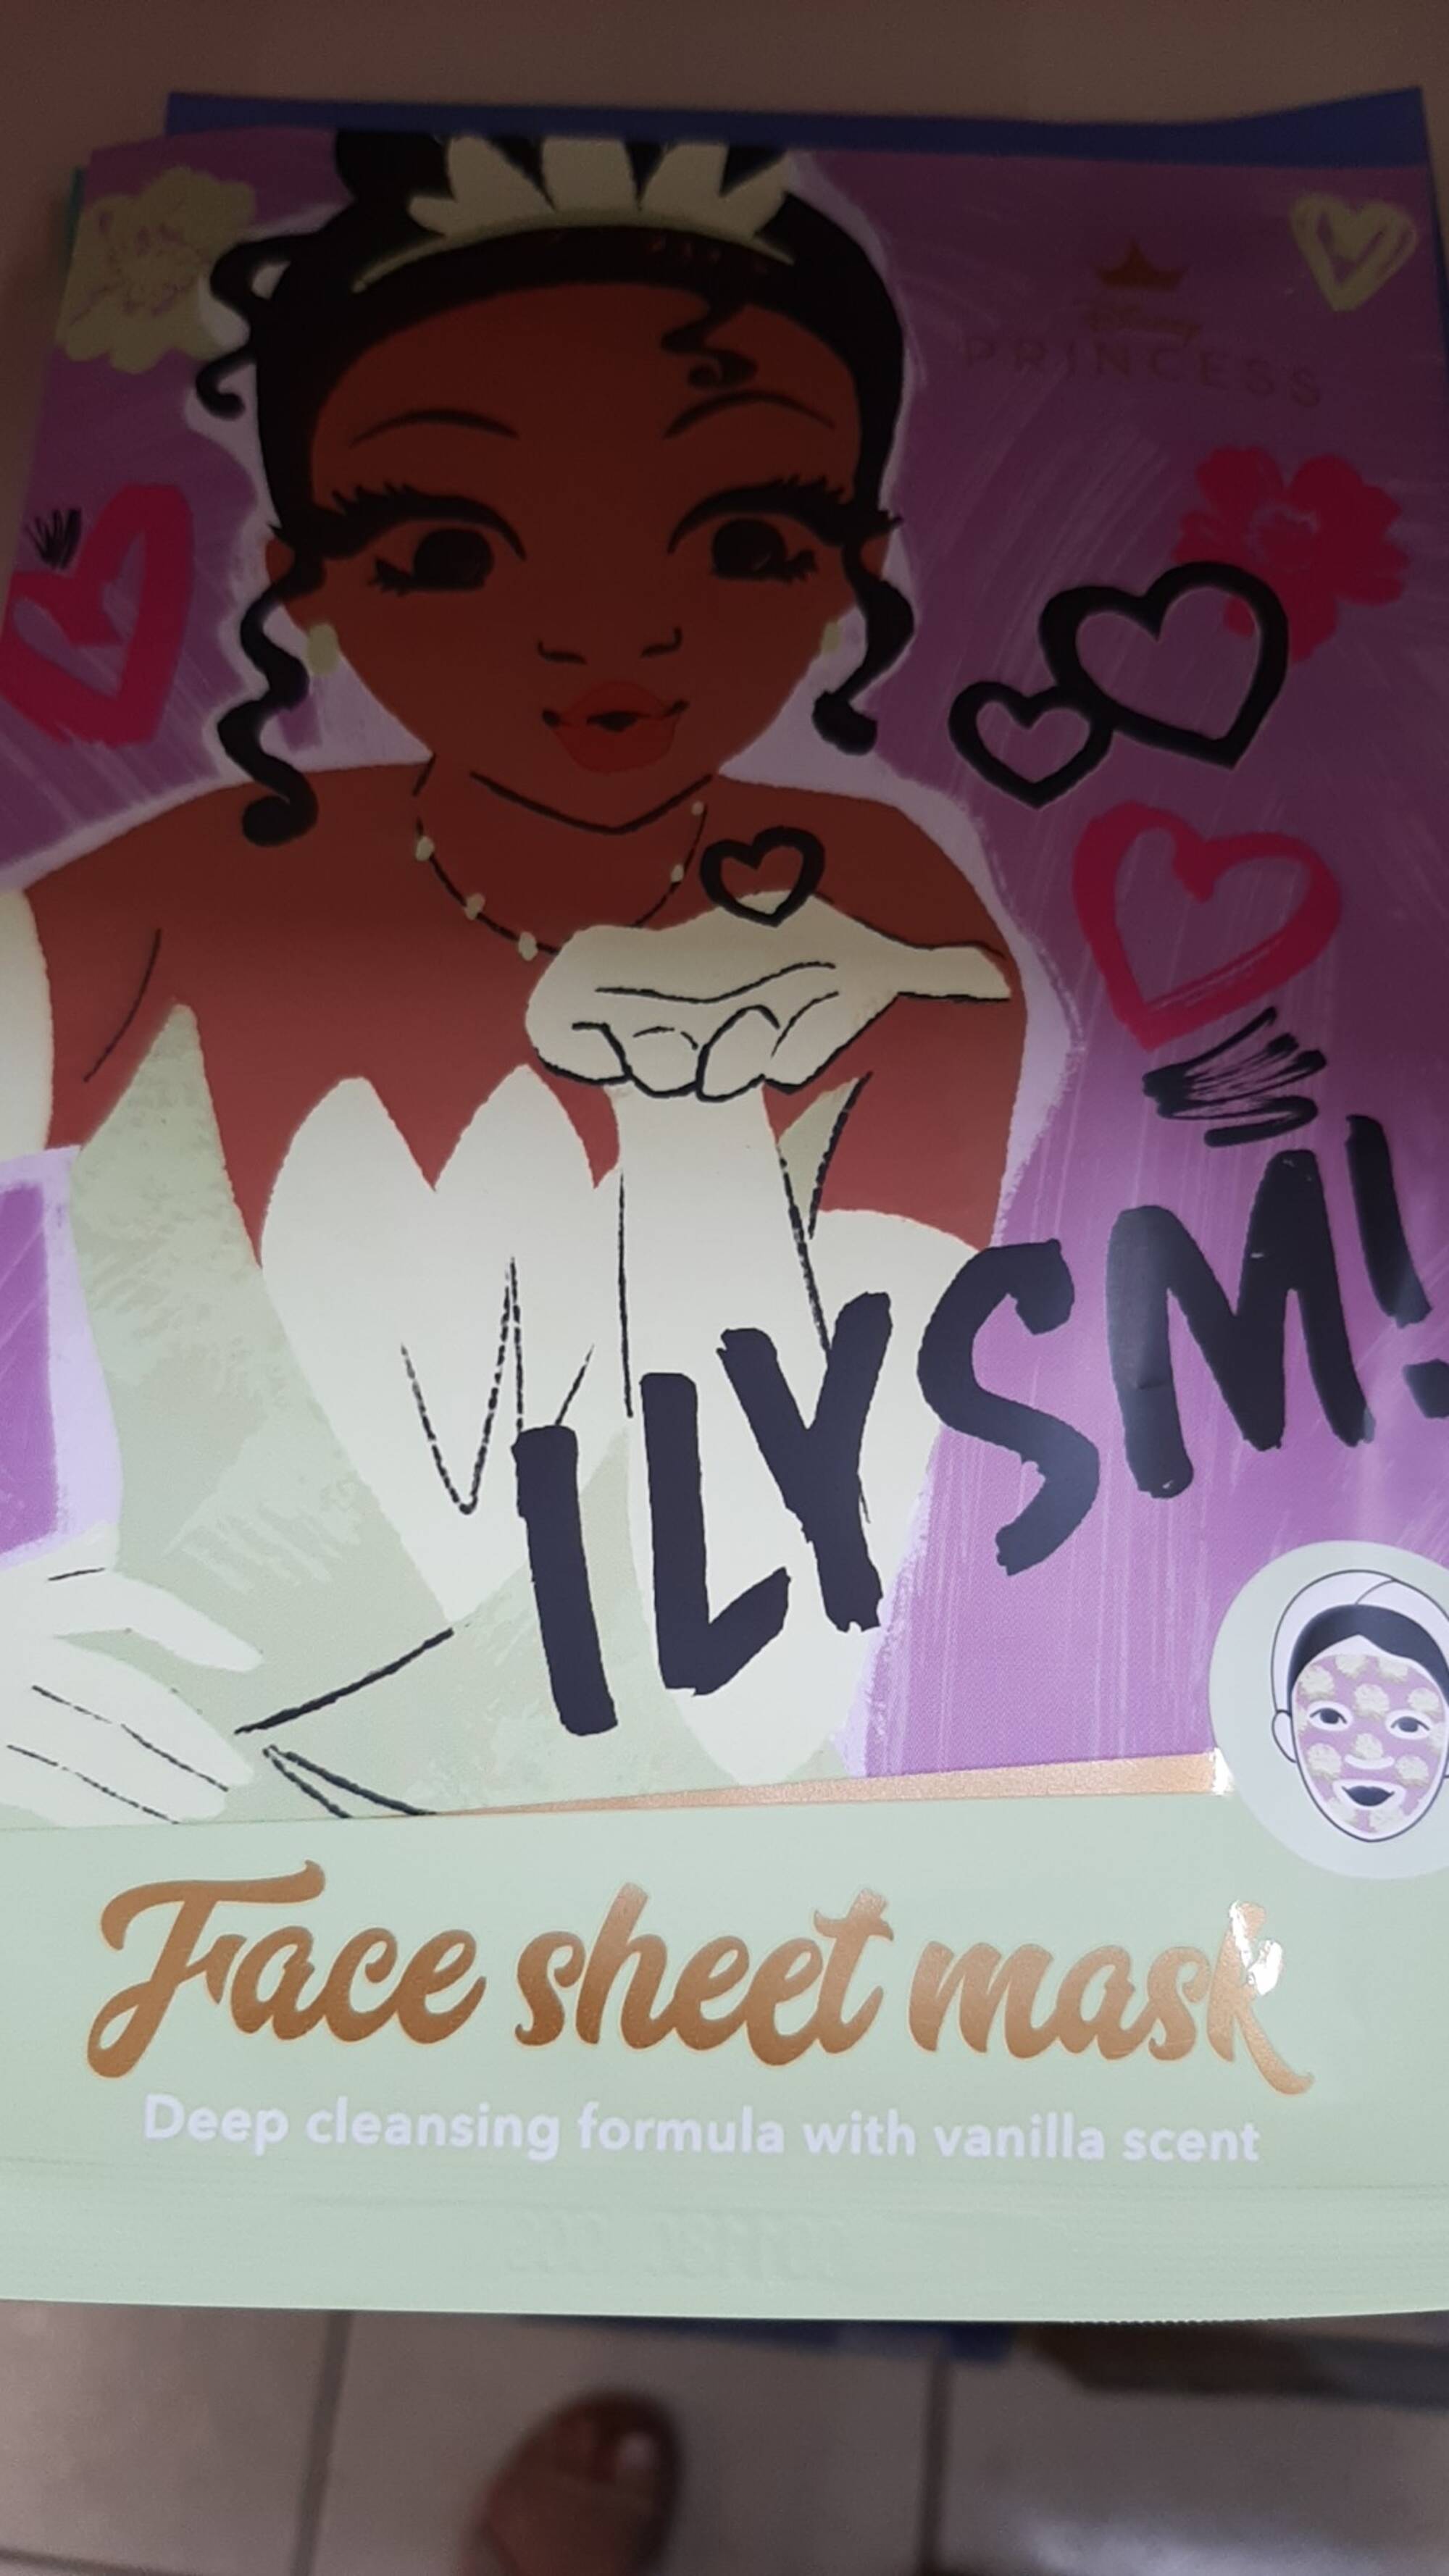 DISNEY - Princess Ilysm ! - Face sheet mask